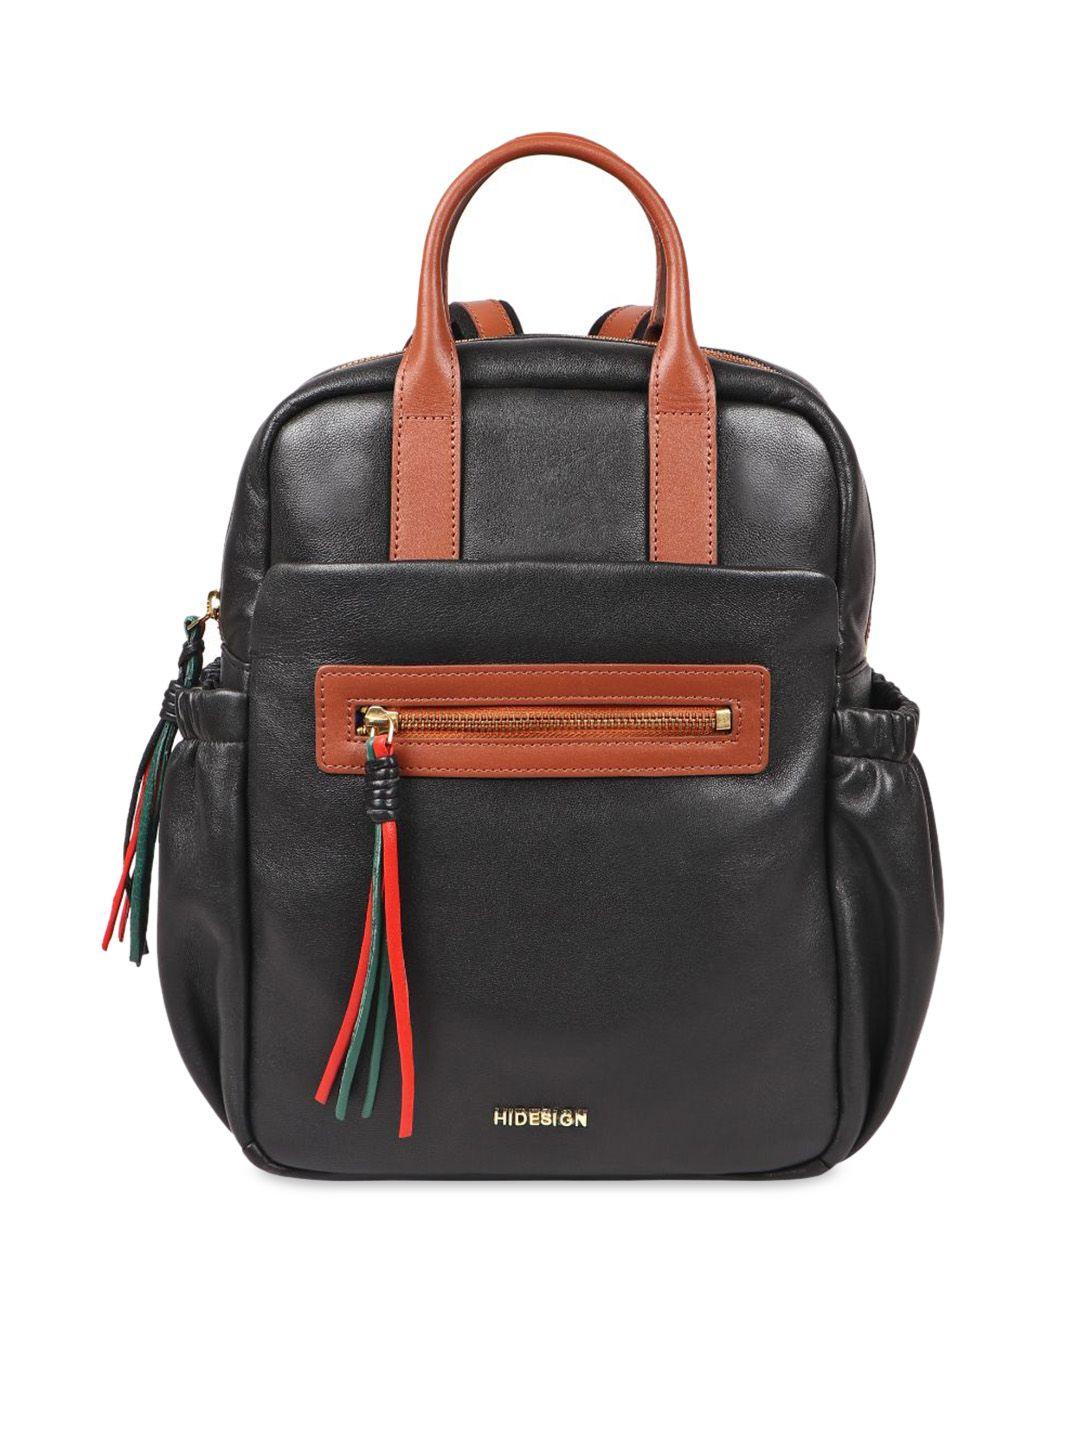 hidesign ergonomic leather backpack